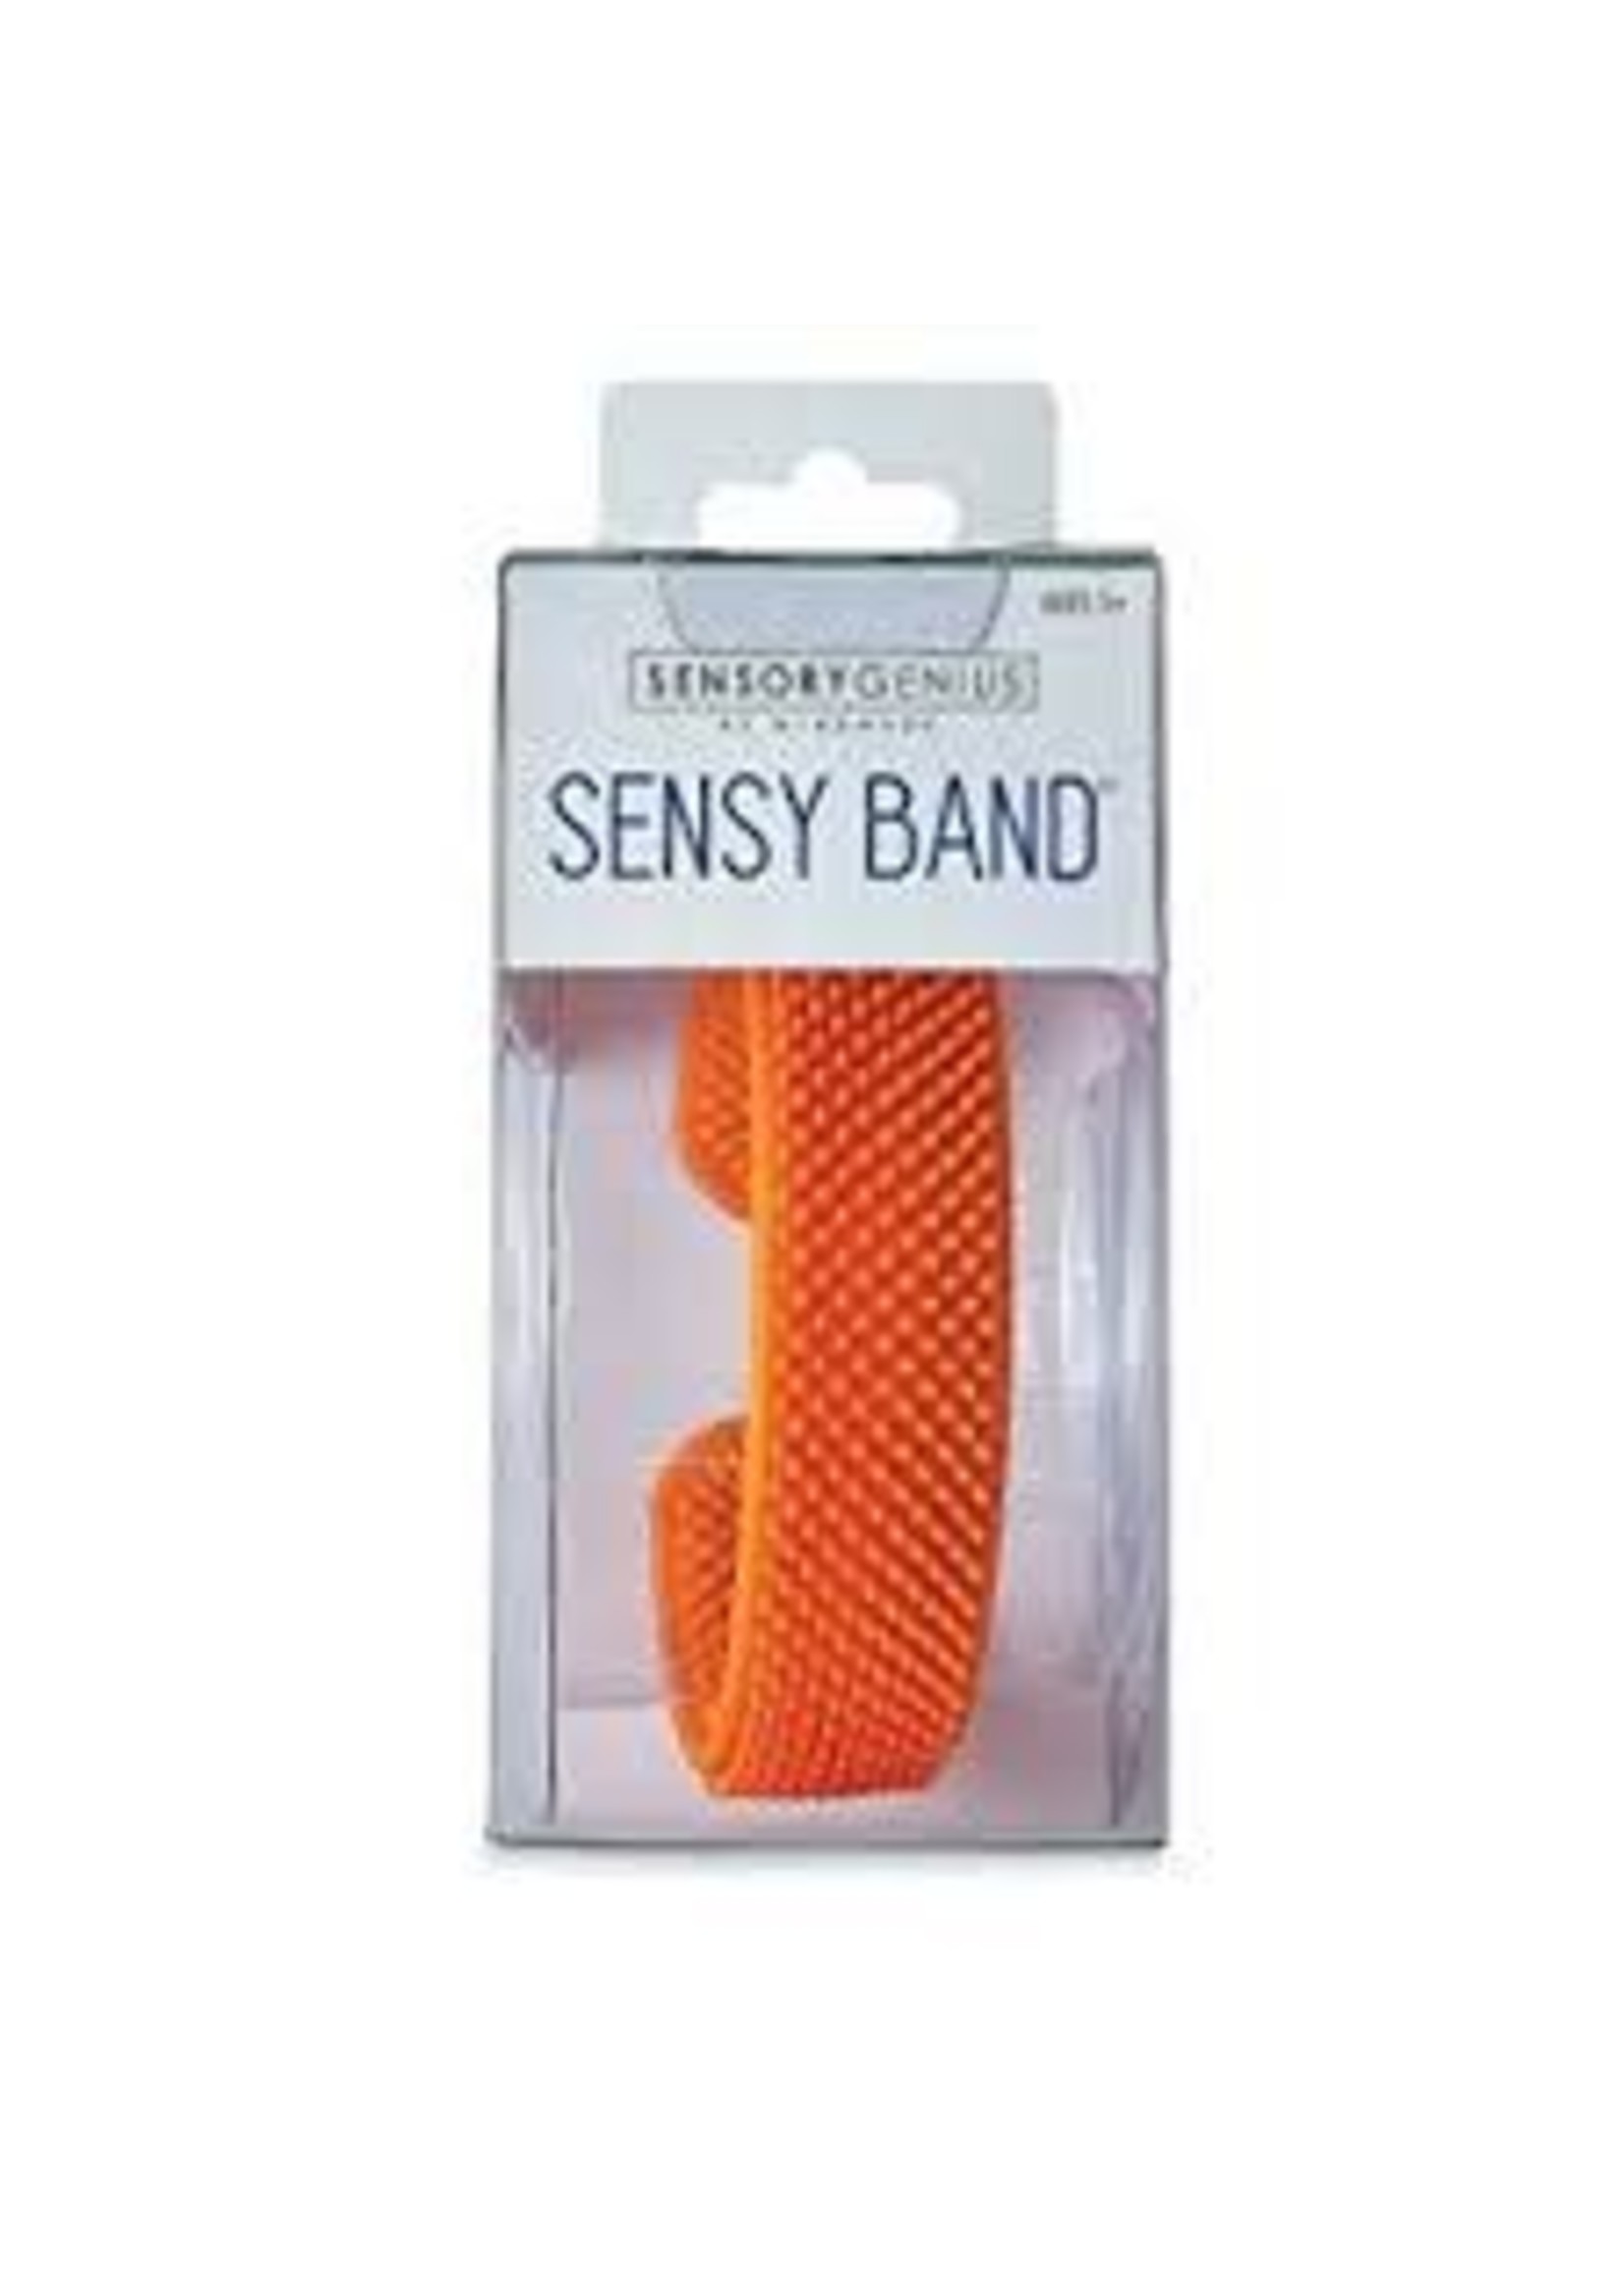 MindWare Sensy Band (Sensory Genius)